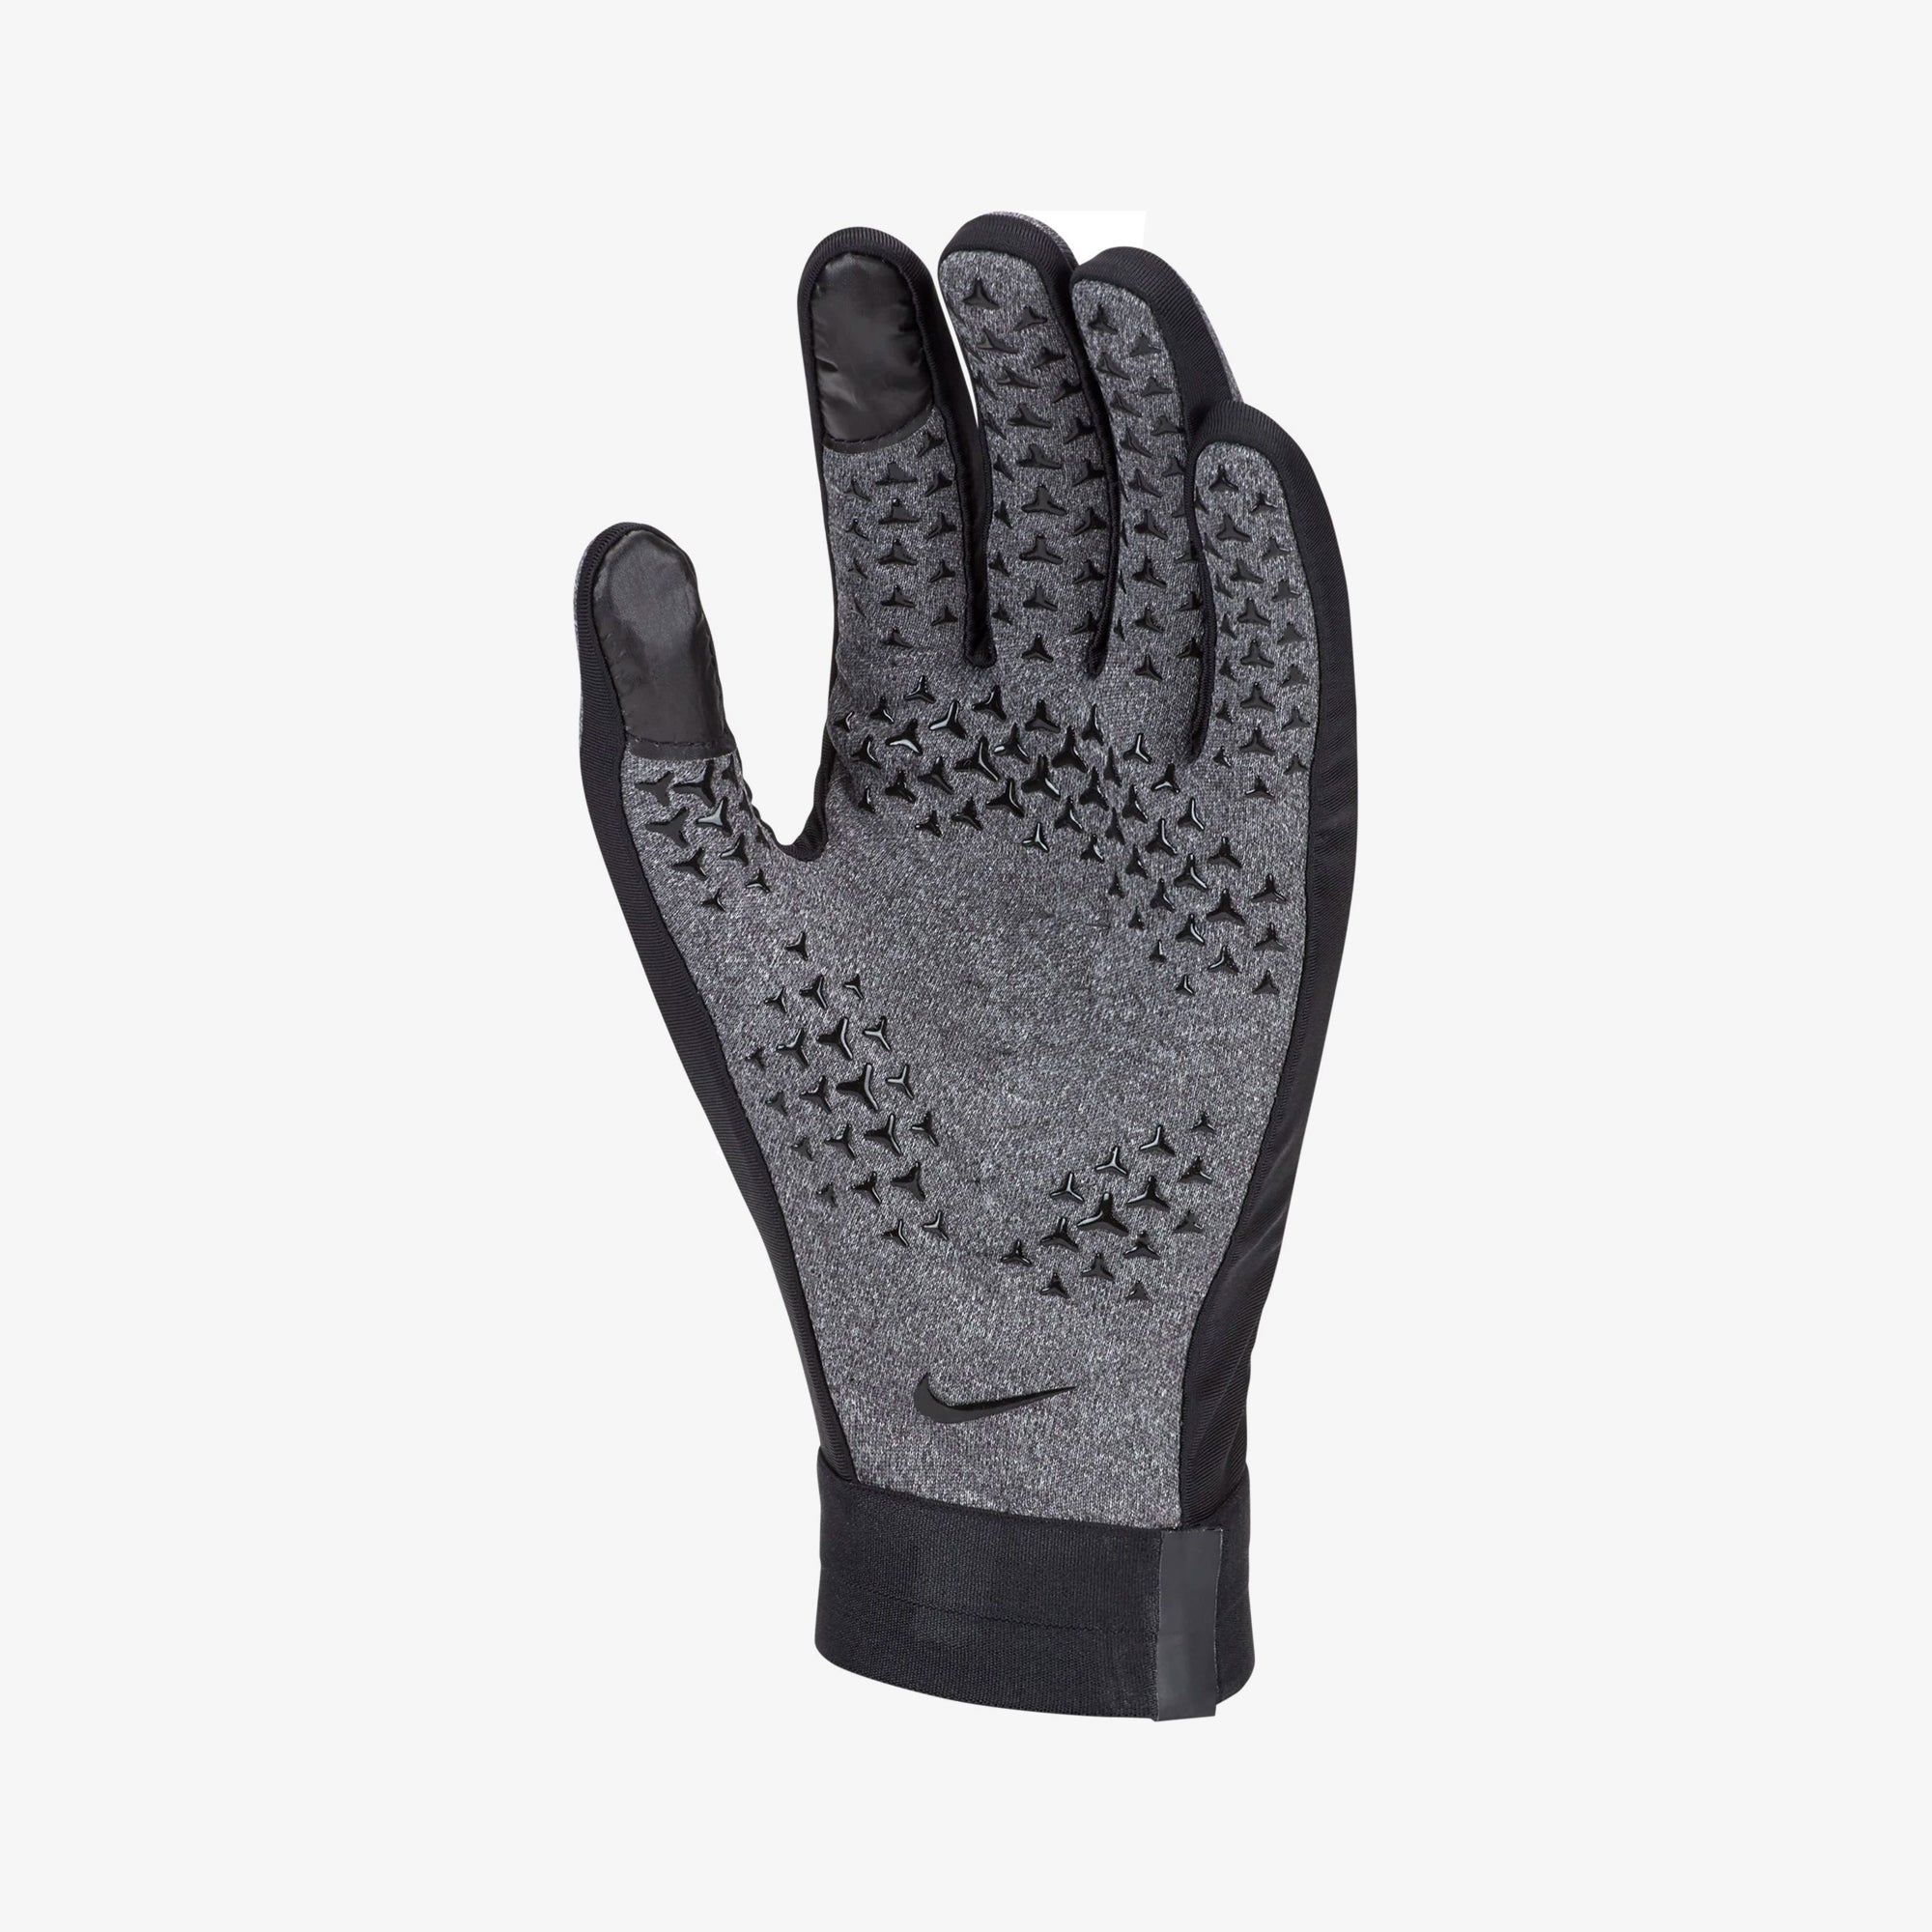 Condimento plan de estudios implícito Academy Hyperwarm Field Player Gloves